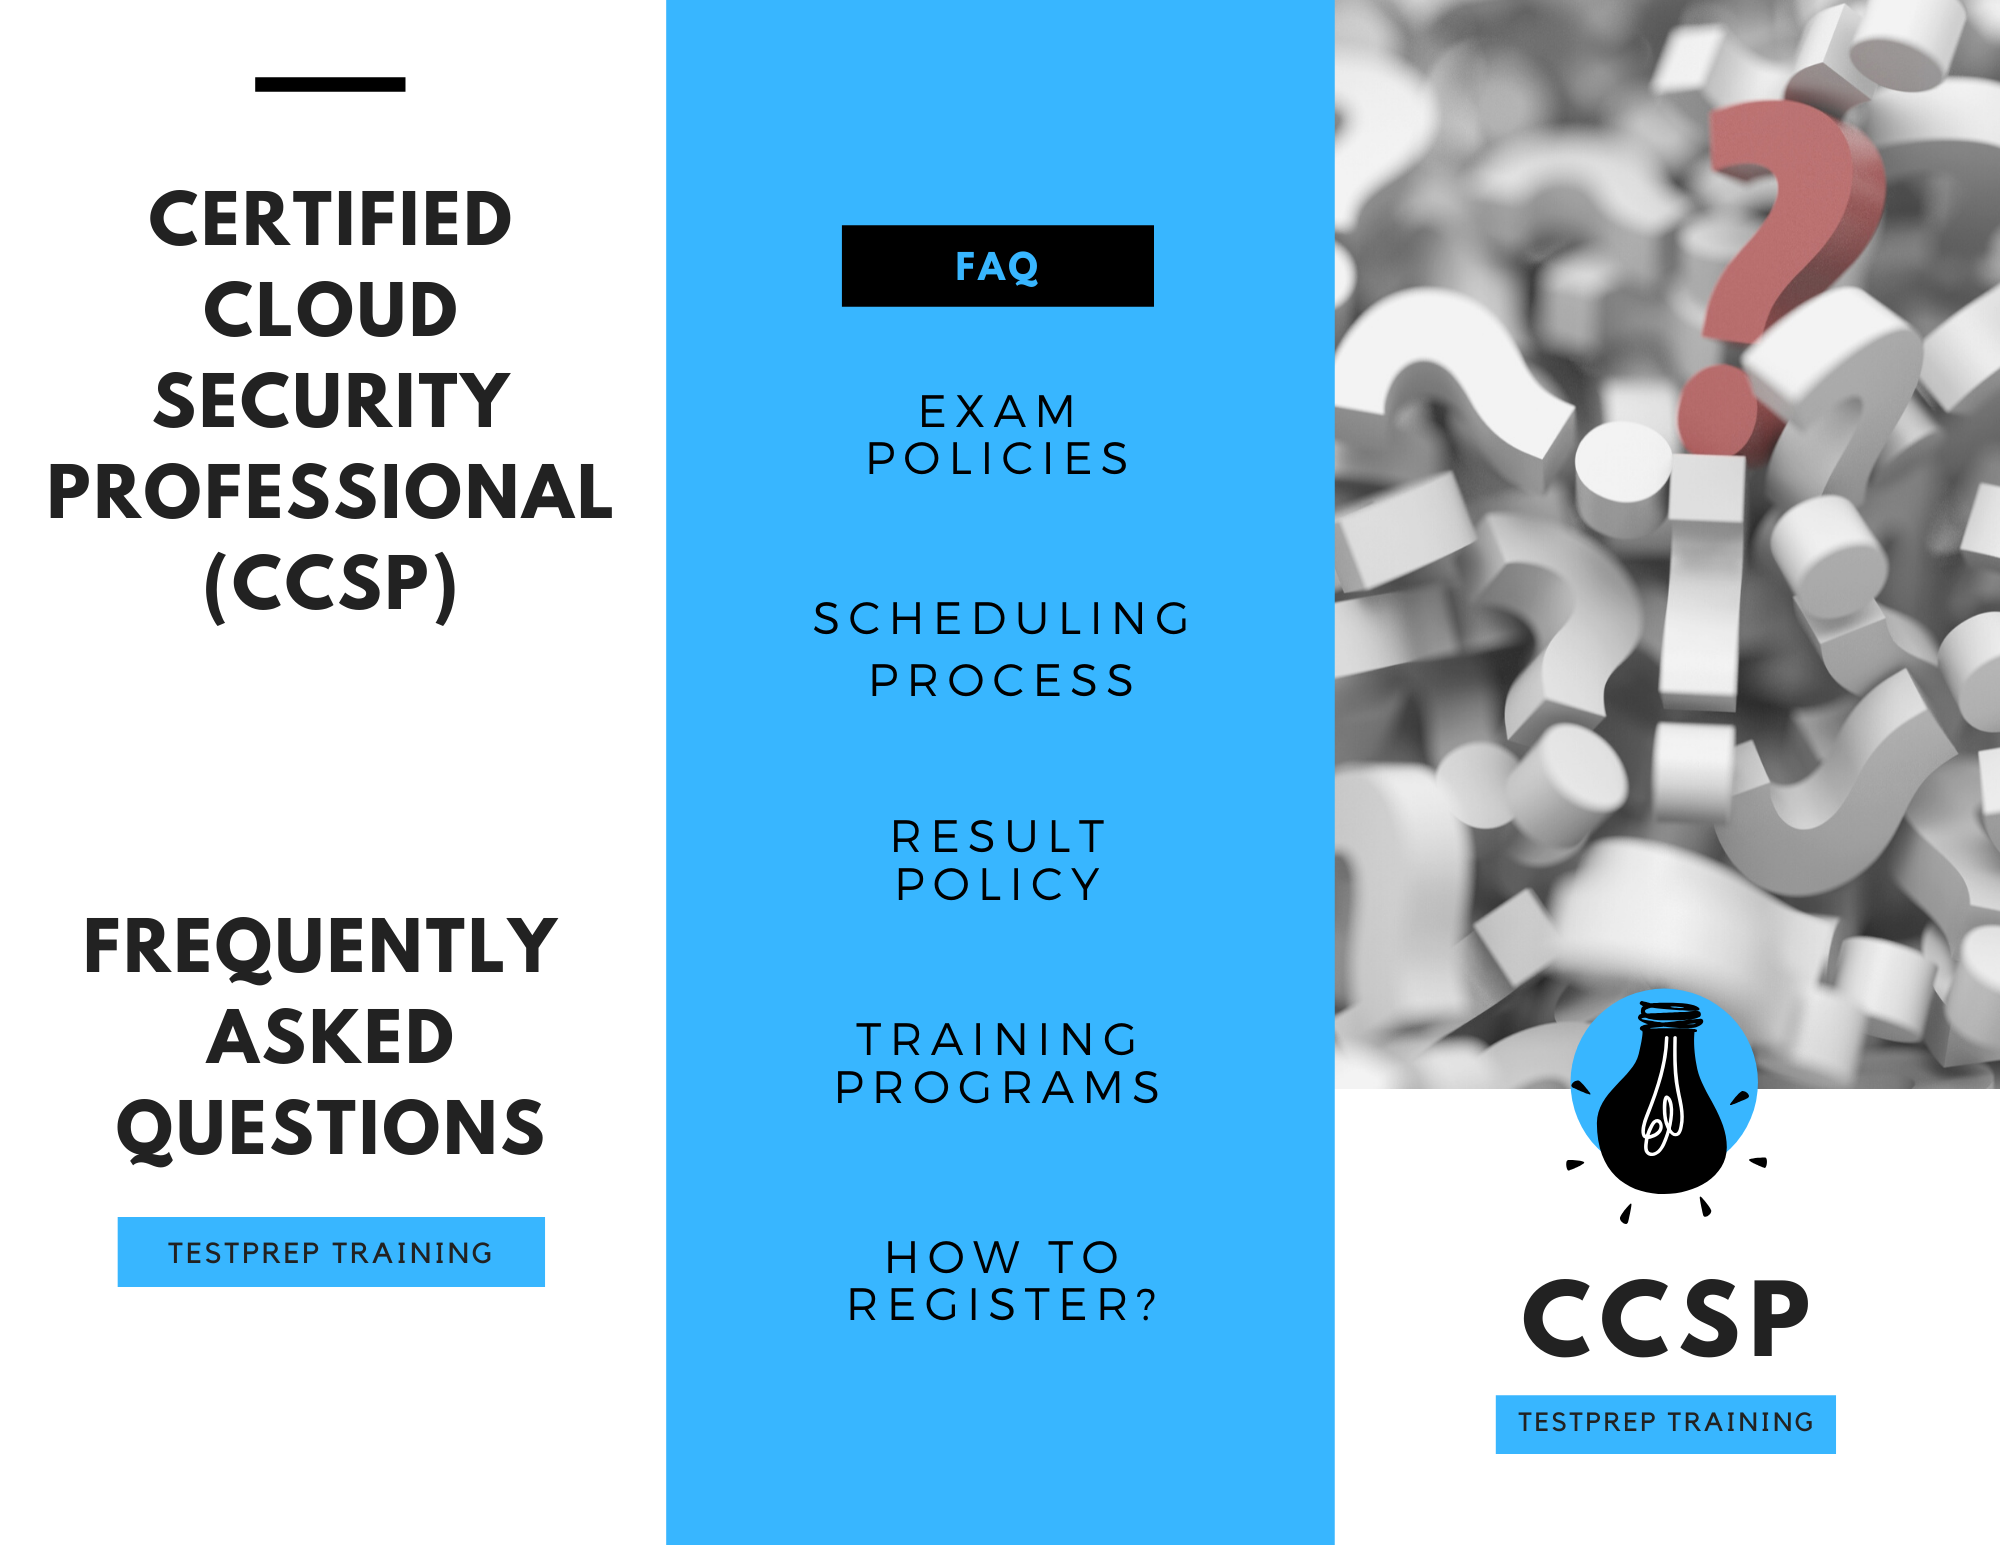 CCSP, Certified Cloud Security Professional FAQ